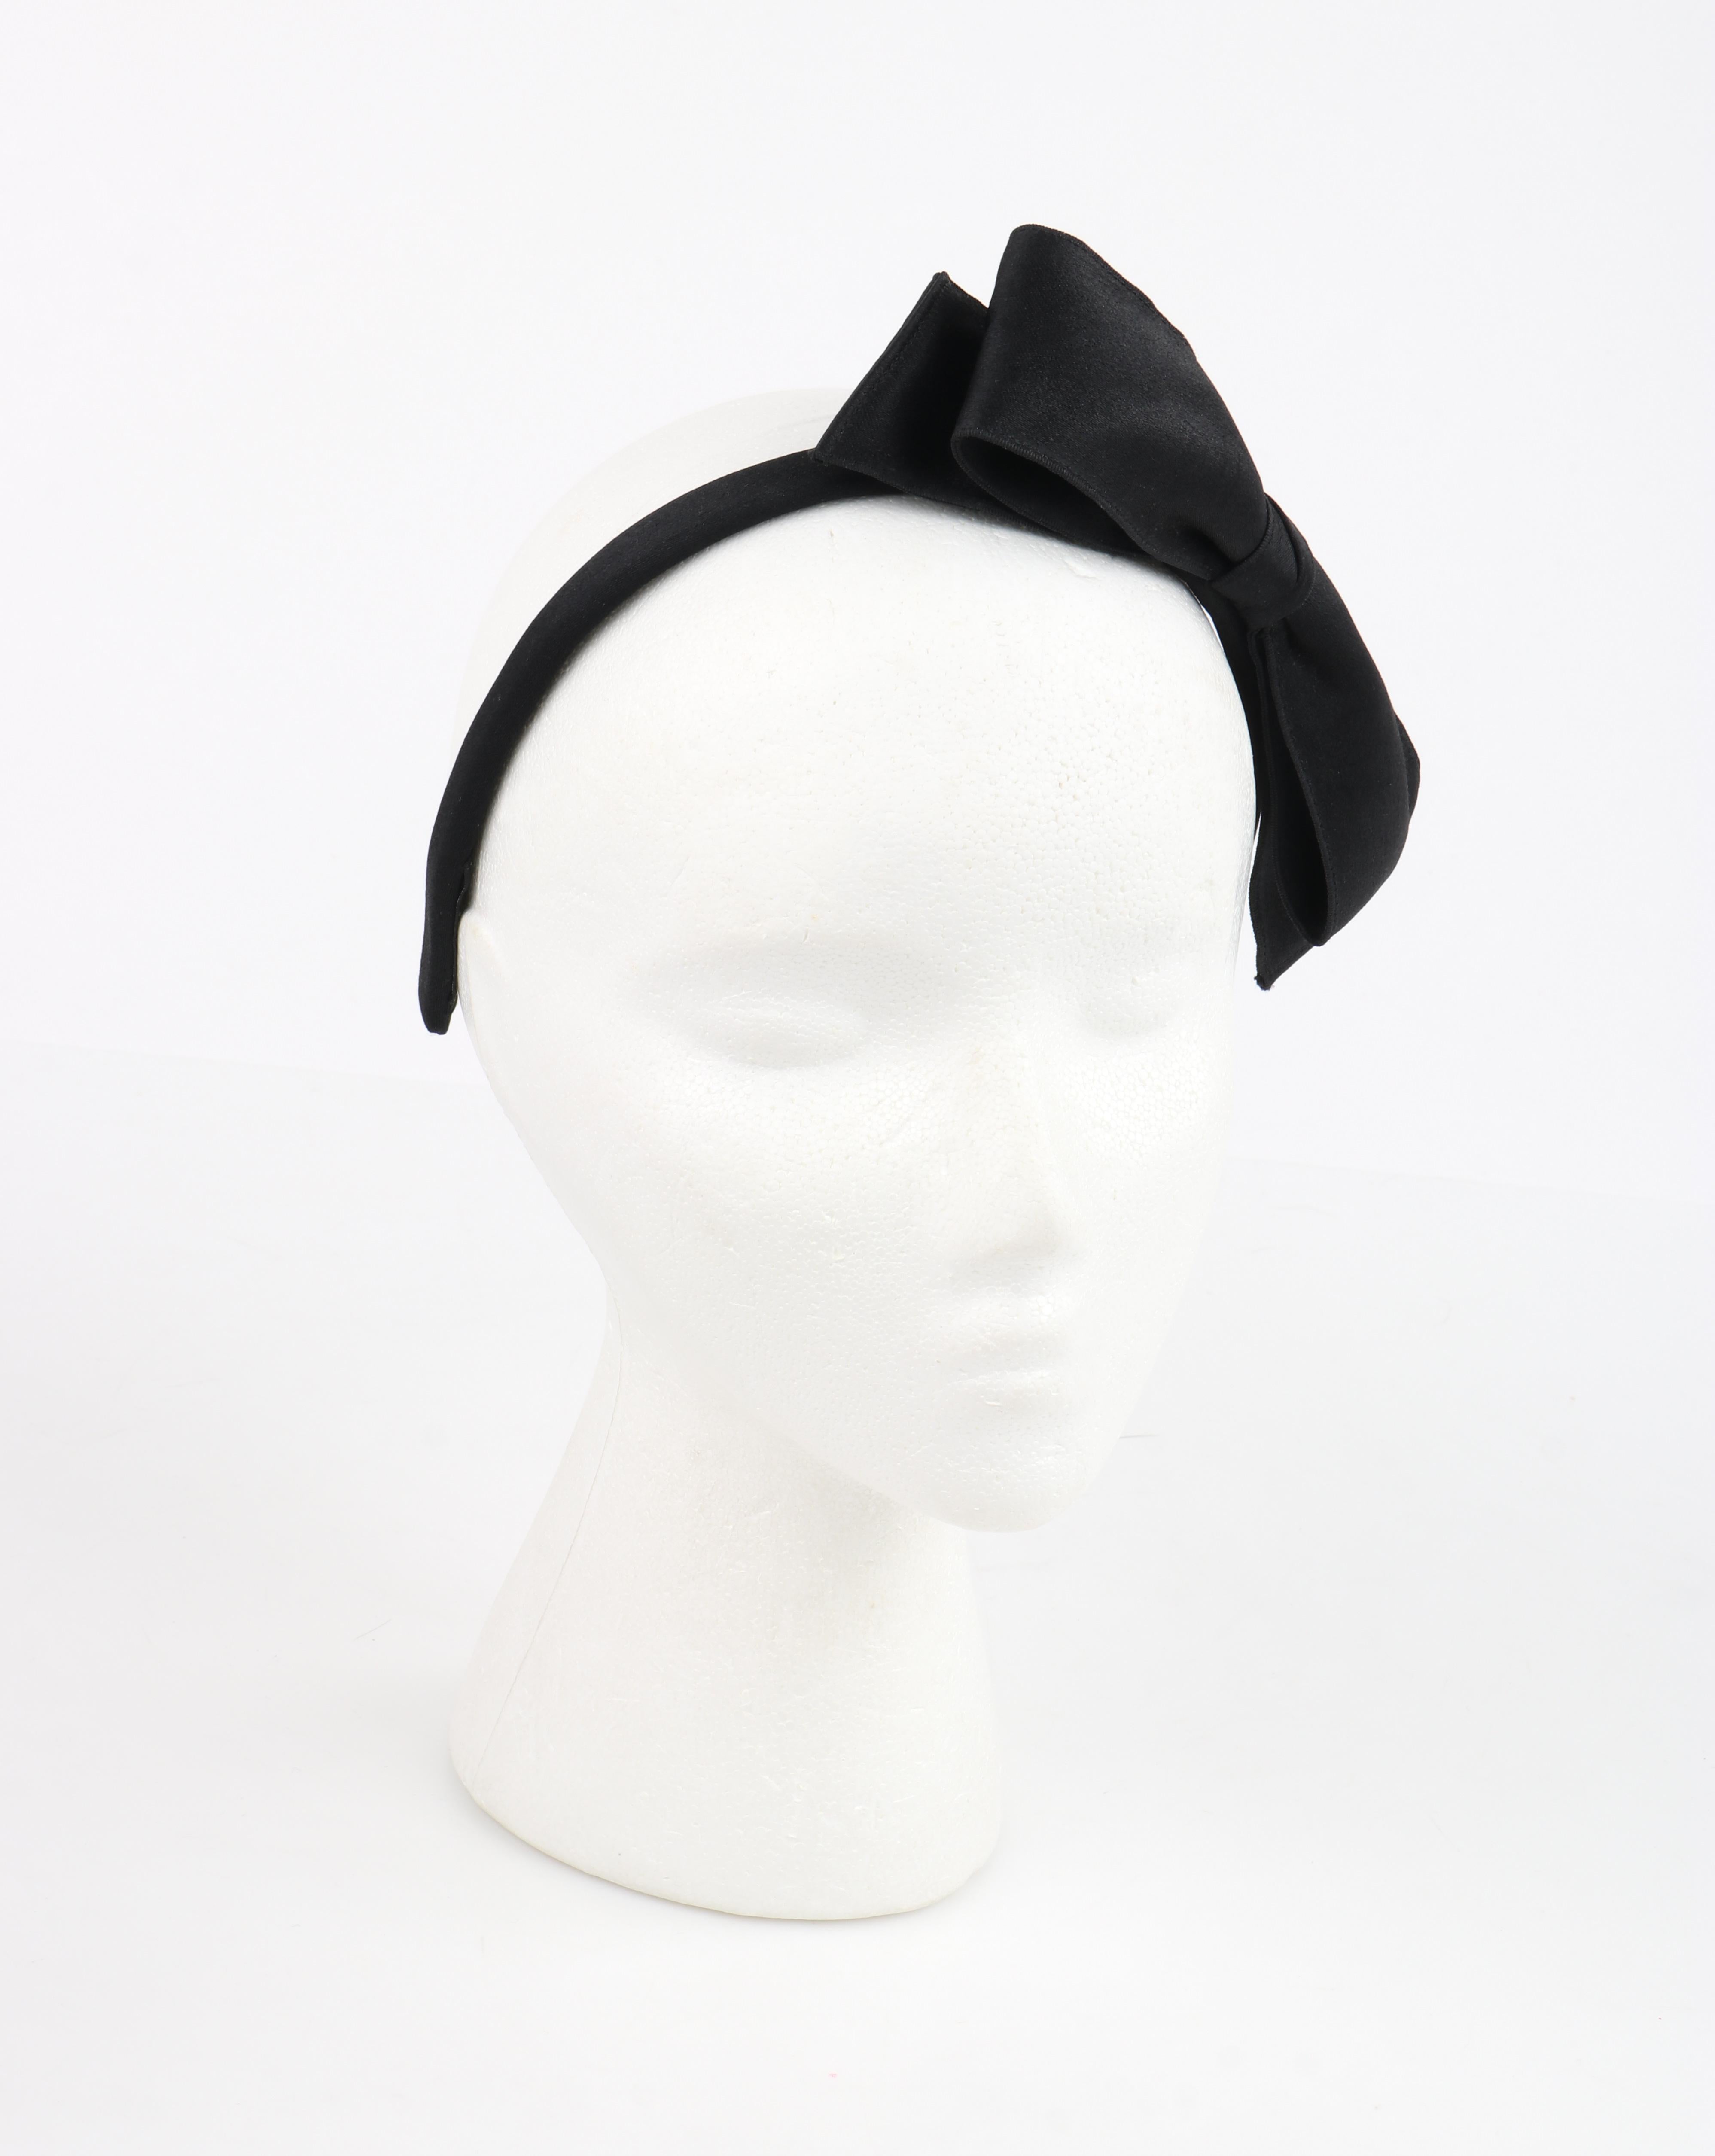 Women's CHANEL F/W 2006 Black Satin Large Asymmetrical Classic Bow Headband Headpiece